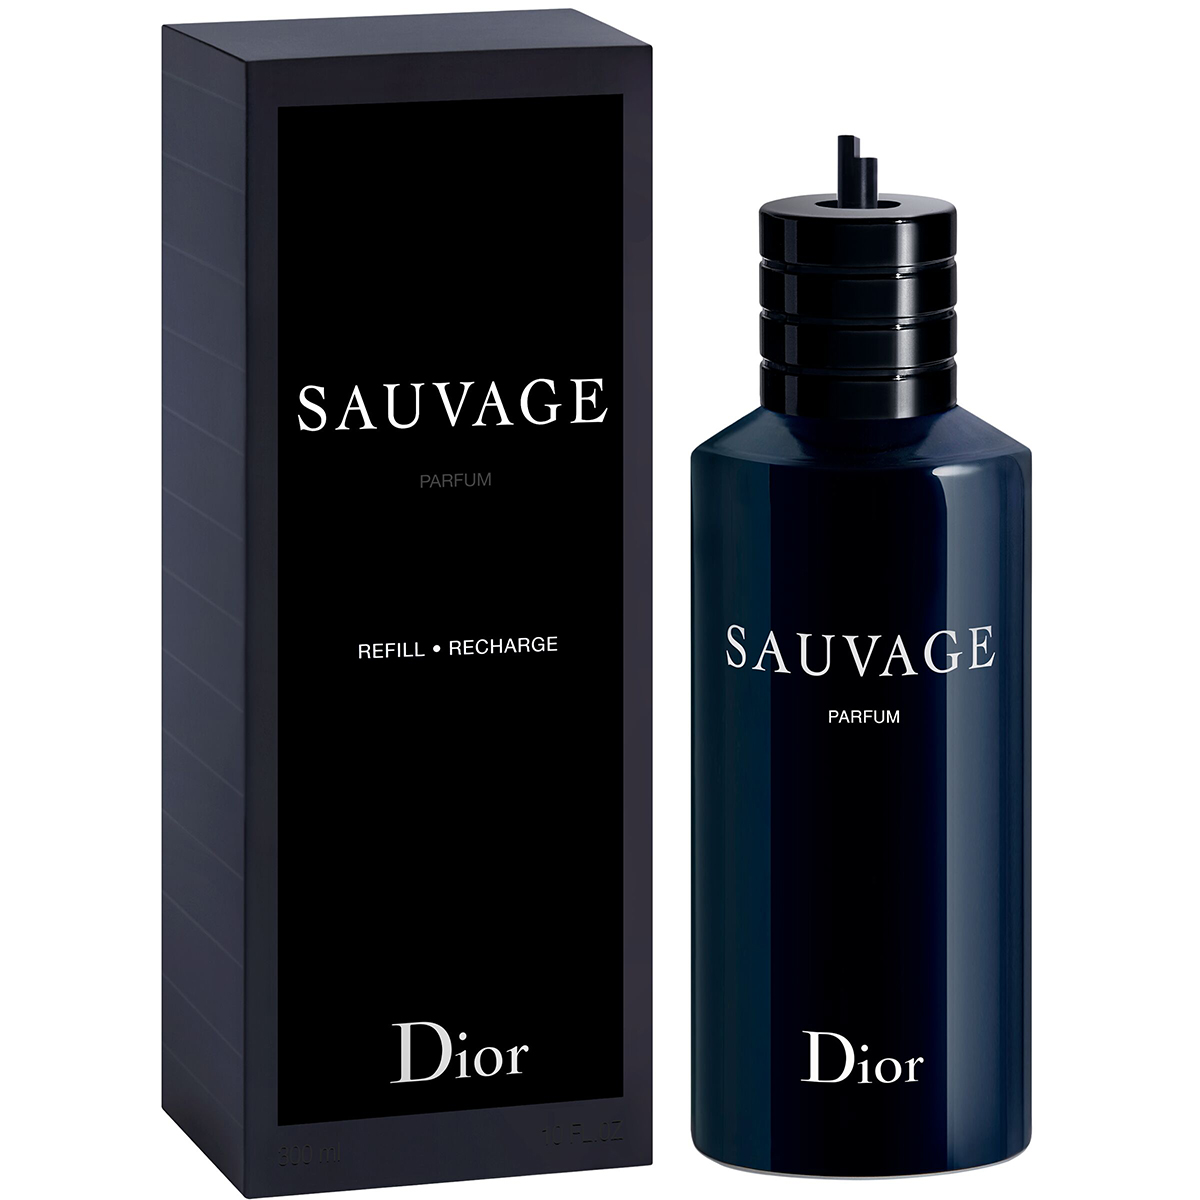 Dior Sauvage Parfum Refill